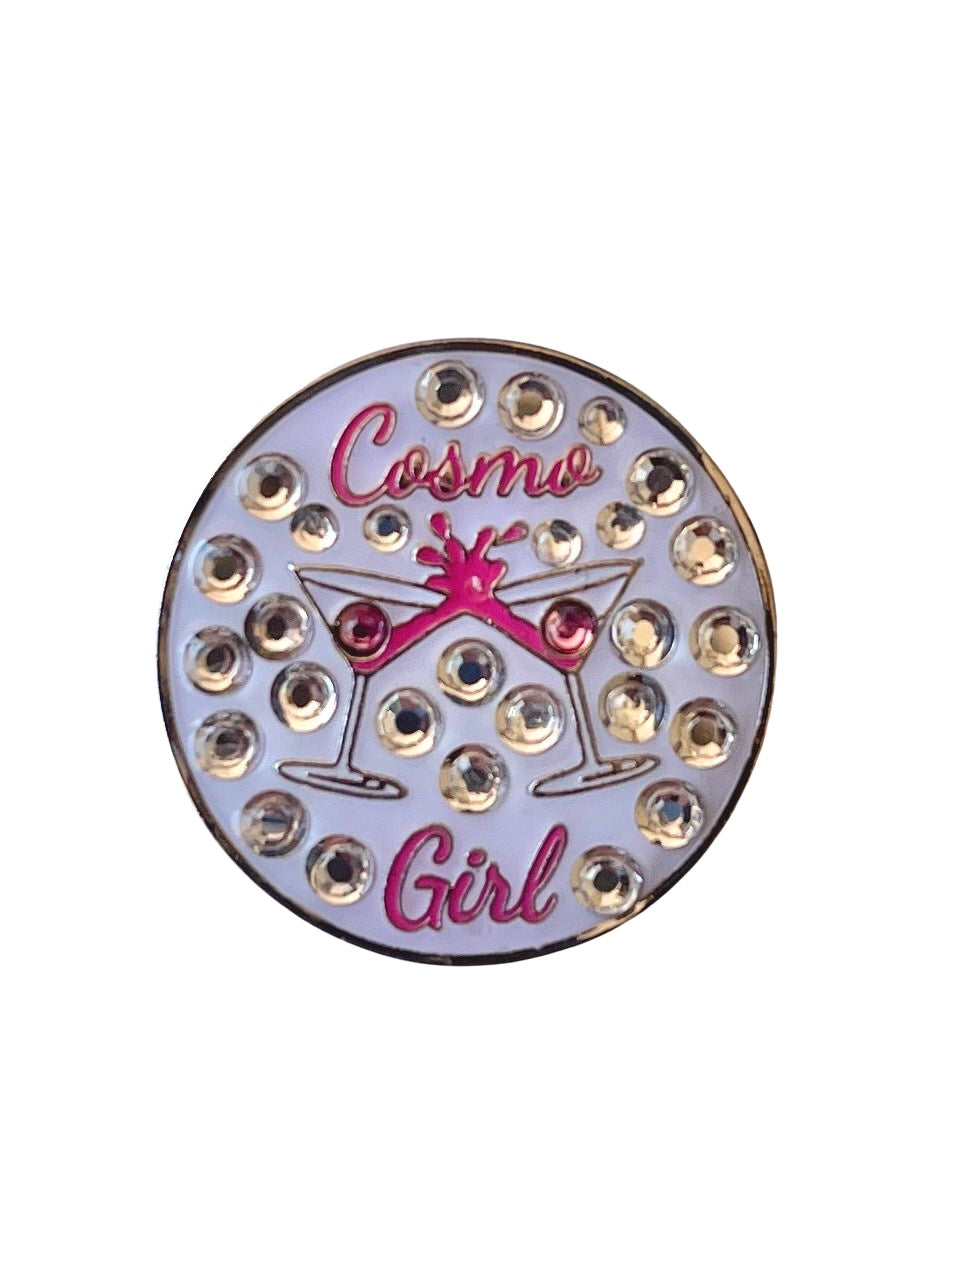 Best Of Golf America Crystal Rim Ball Marker - Cosmo Girl - Skorzie